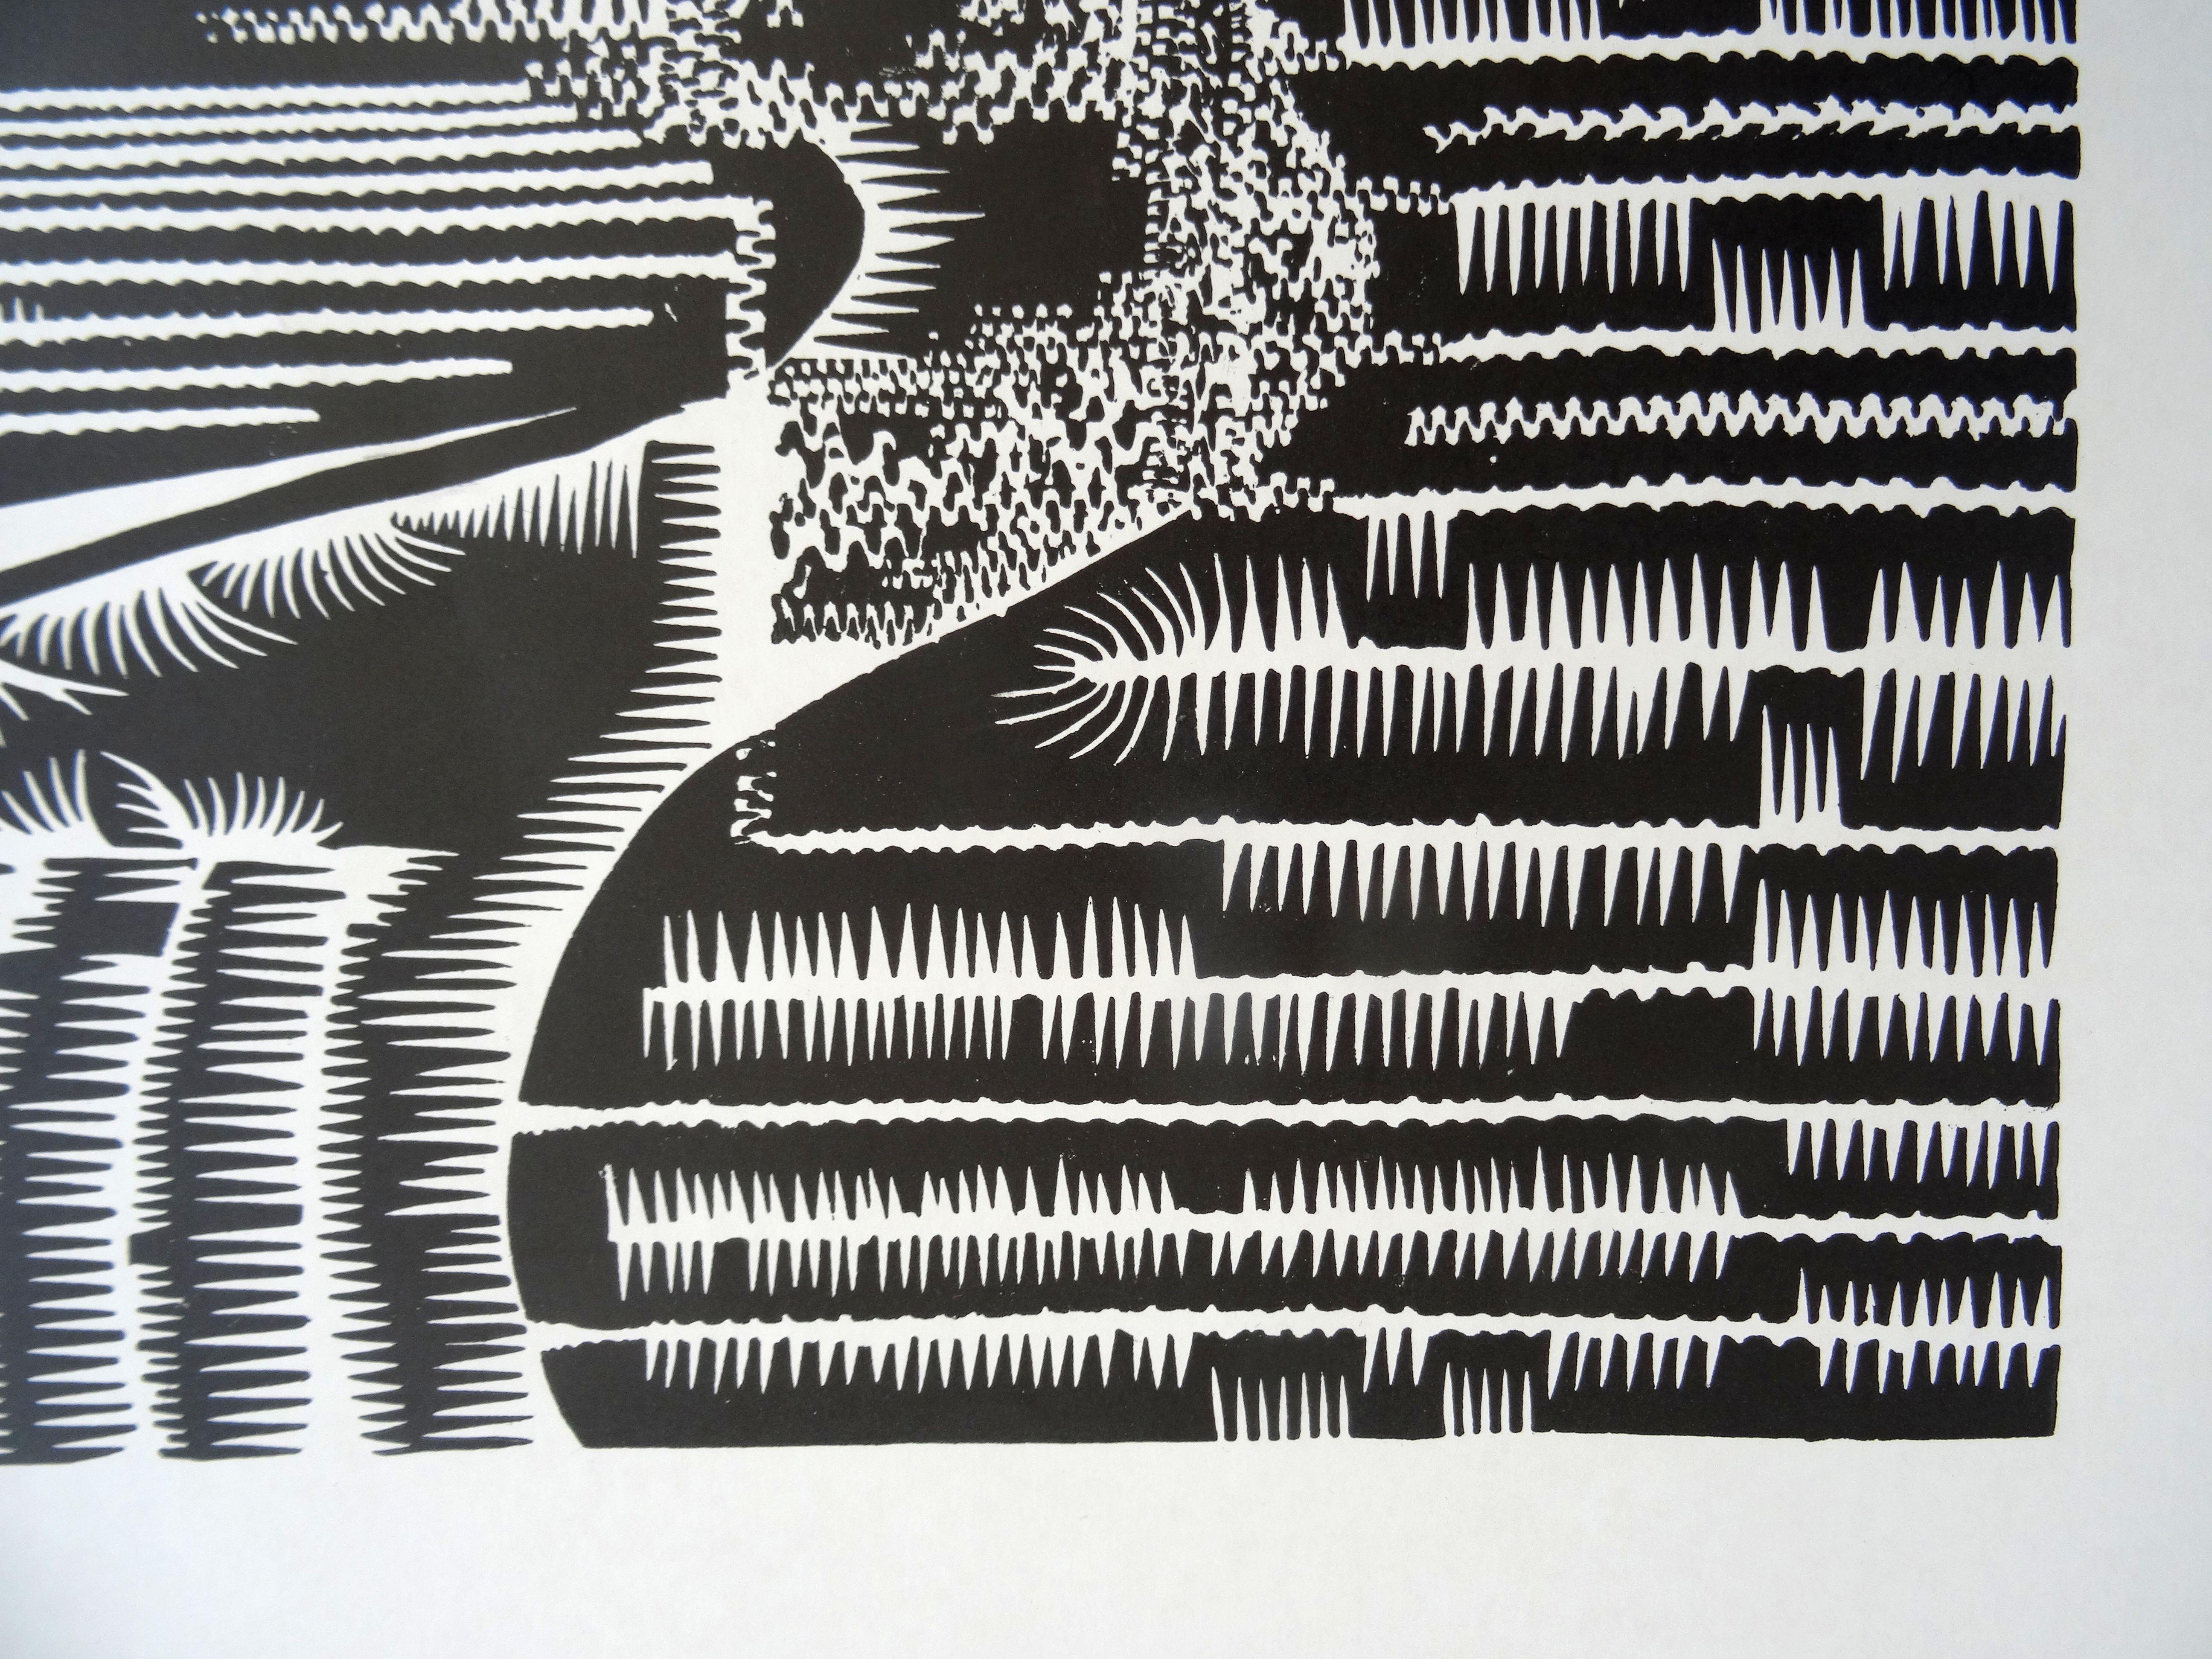 Woodcocks Rückkehr. 1970, Papier, Linolschnitt, Druckgröße 52x55 cm; insgesamt 70x65 cm (Grau), Animal Print, von Dainis Rozkalns